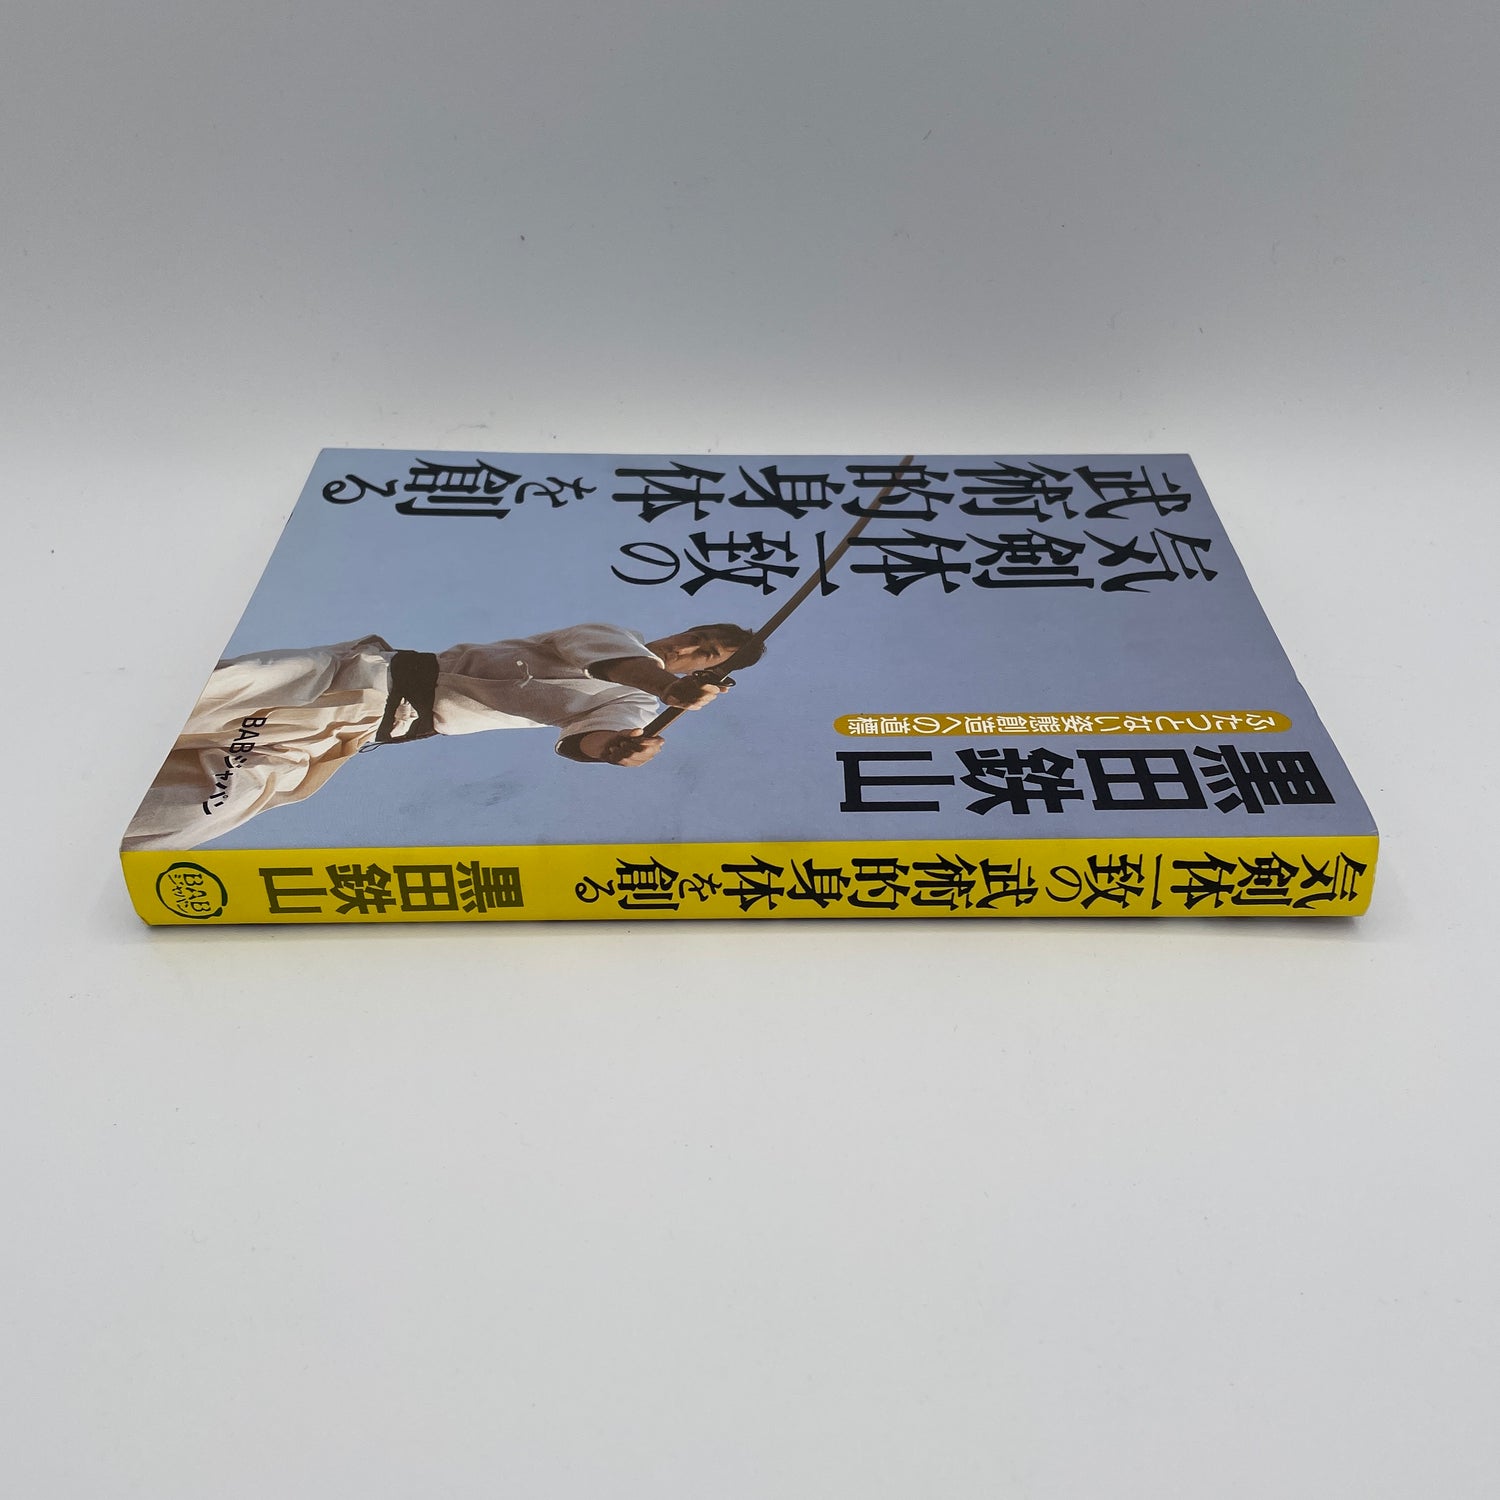 Ki Ken Tai Ichi Book 1 by Tetsuzan Kuroda (1st Edition) (Preowned)